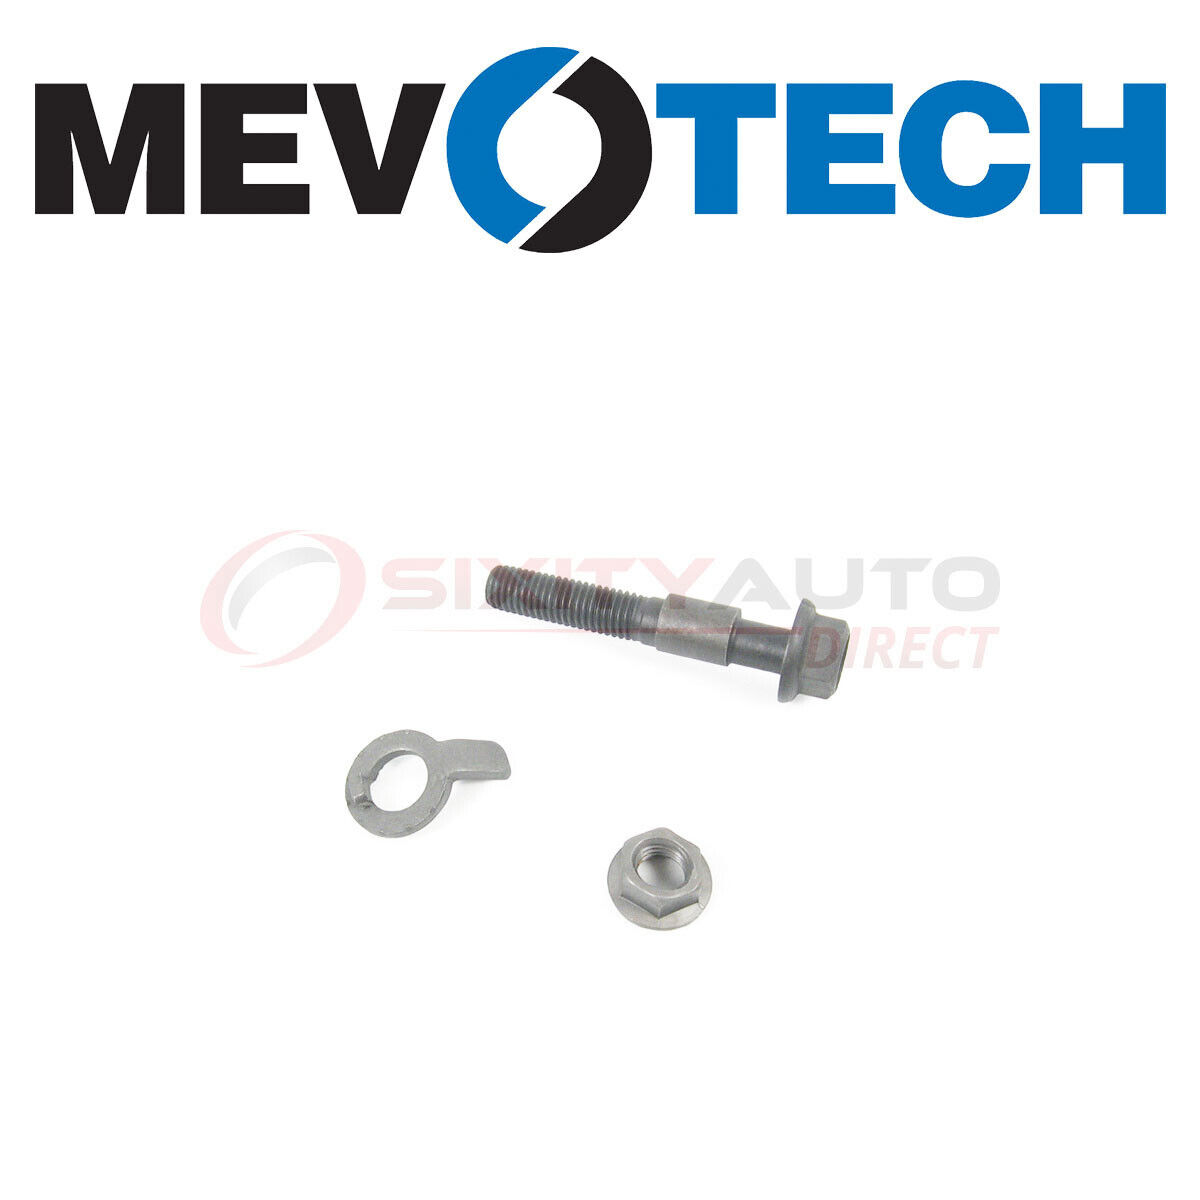 Mevotech Alignment Camber Kit for 1992-1996 Mazda MX-3 1.6L L4 - Wheels ya